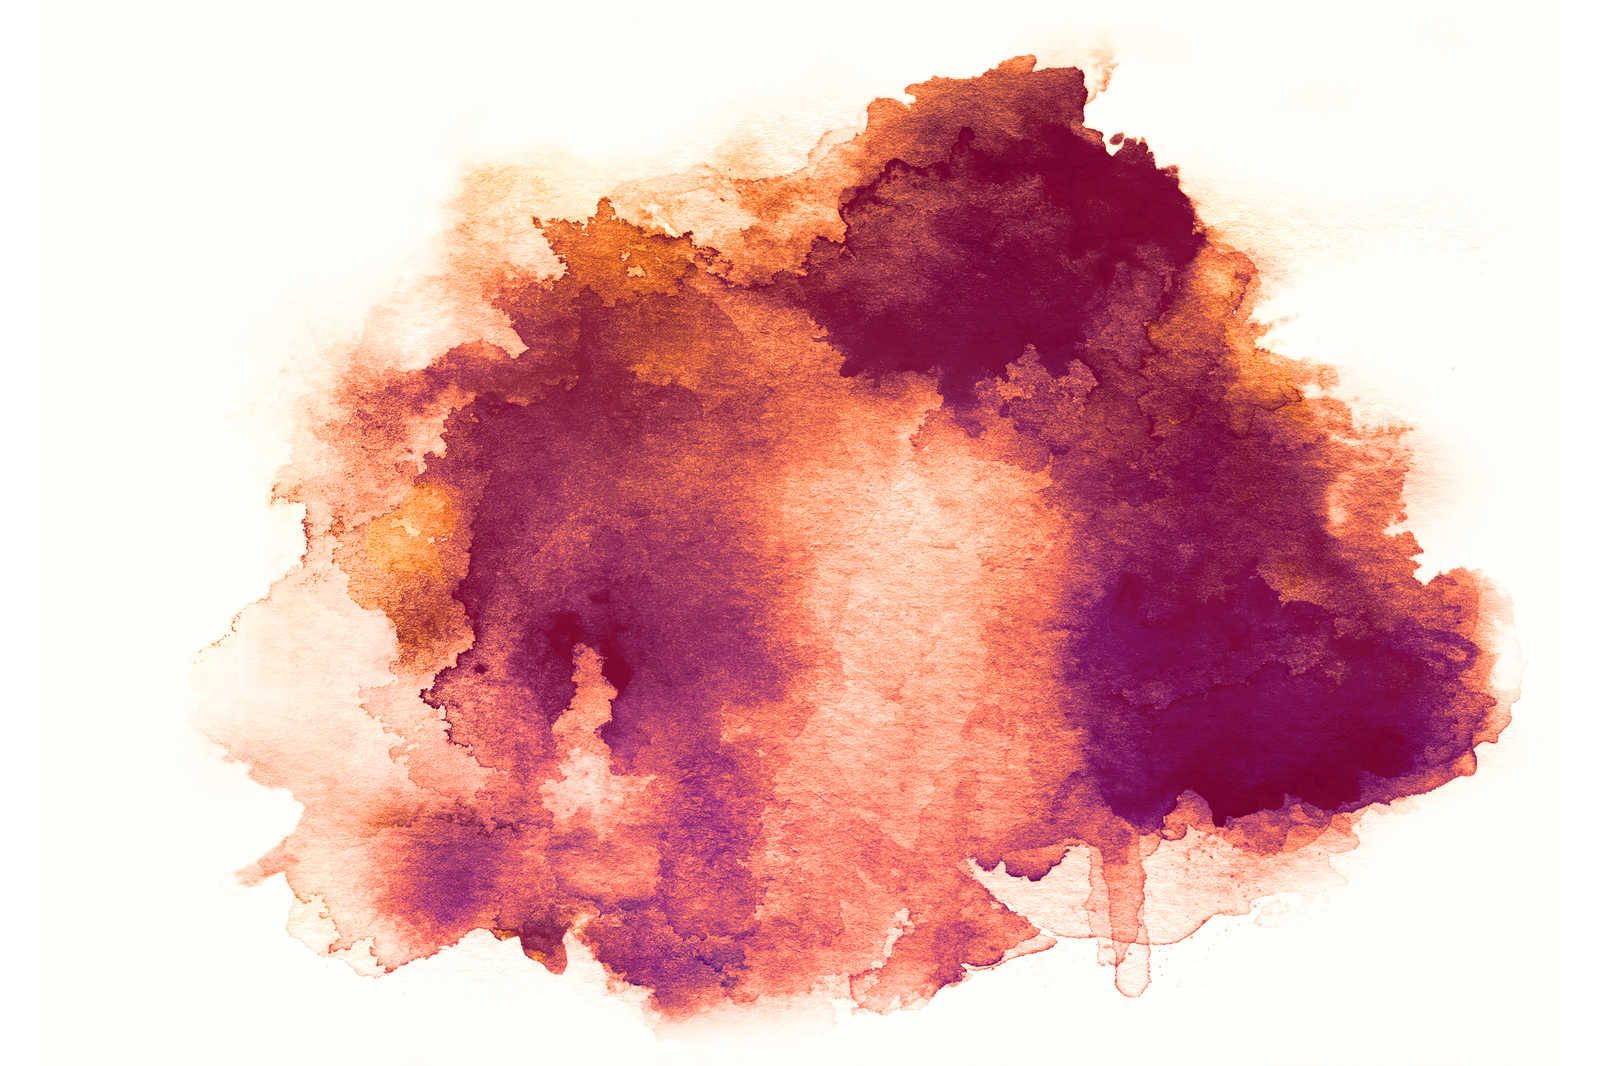             Leinwandbild Aquarell Fleck Rot mit Farbverlauf – 0,90 m x 0,60 m
        